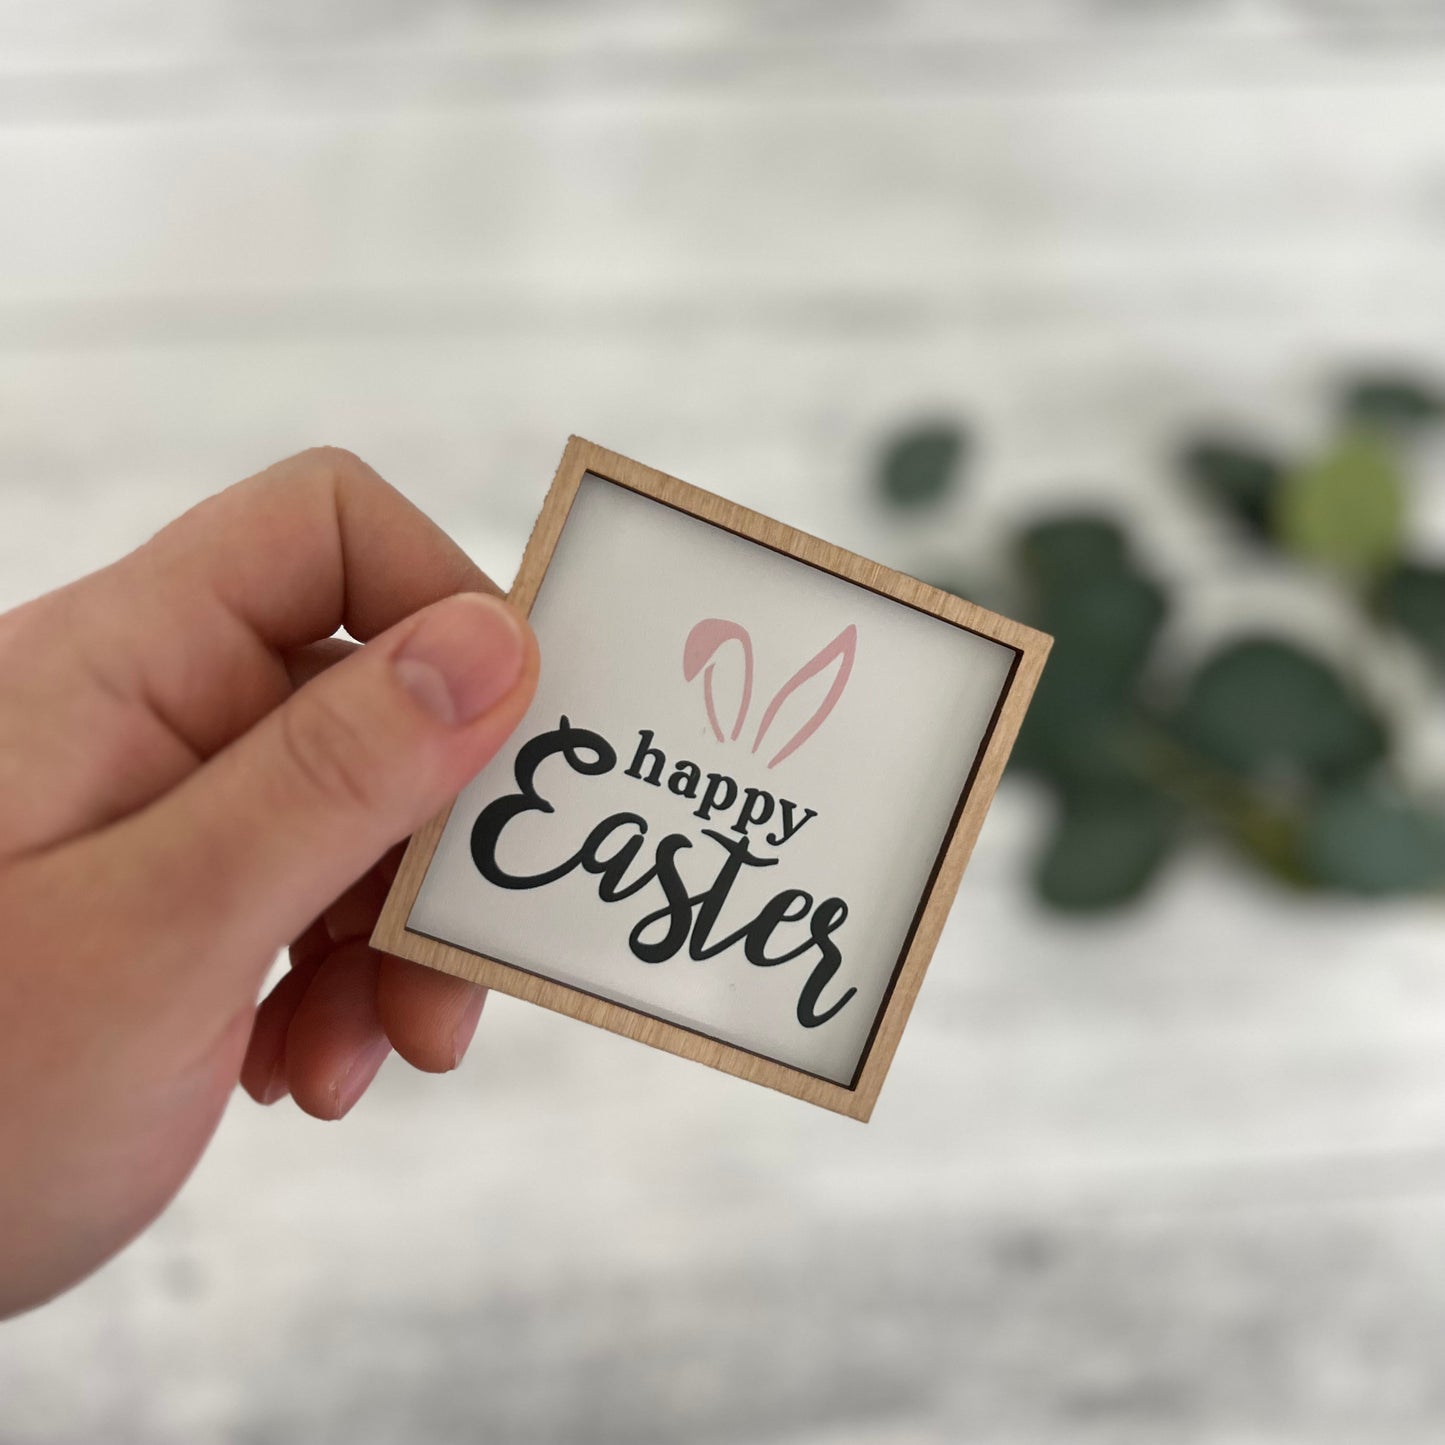 Mini Framed Easter Sign | Happy Easter Sign